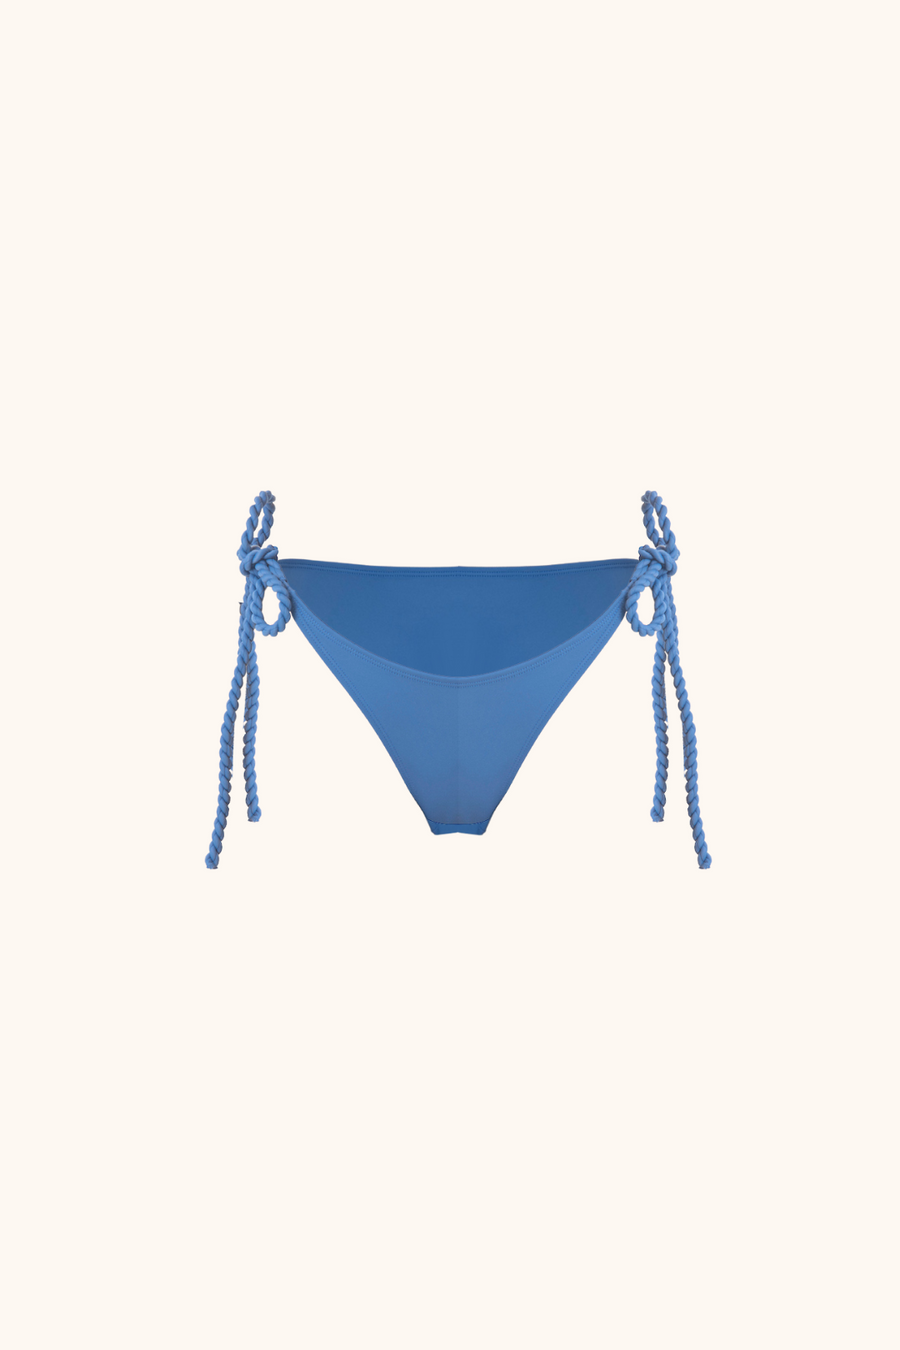 'Steel Blue' Bikini Bottom